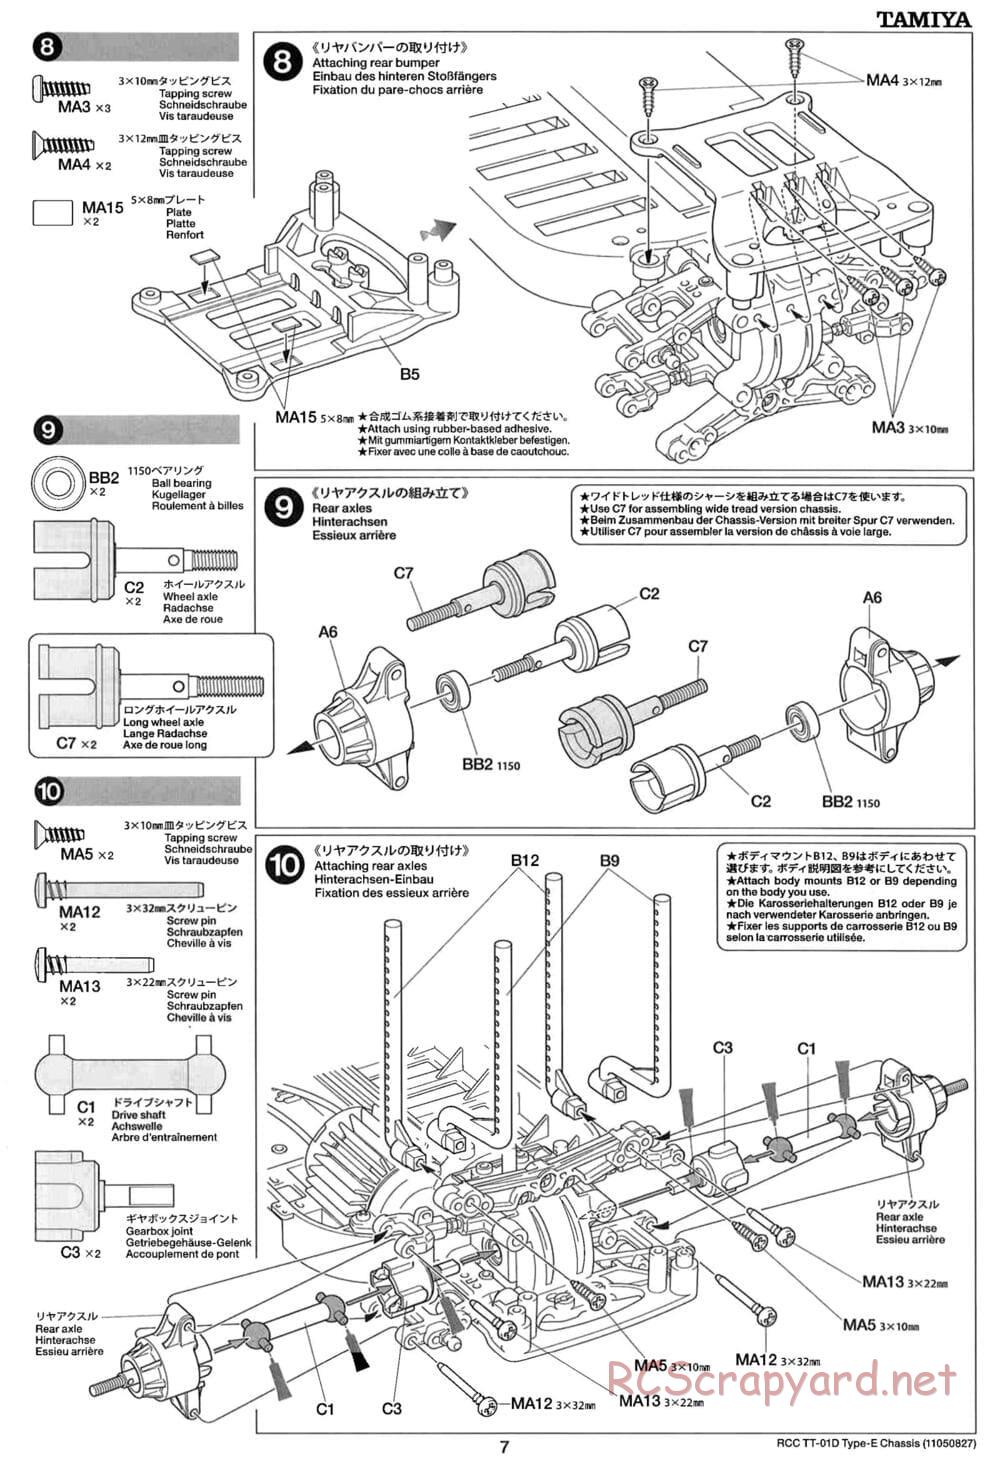 Tamiya - TT-01D Type-E (TT-01ED) - Drift Spec Chassis - Manual - Page 7